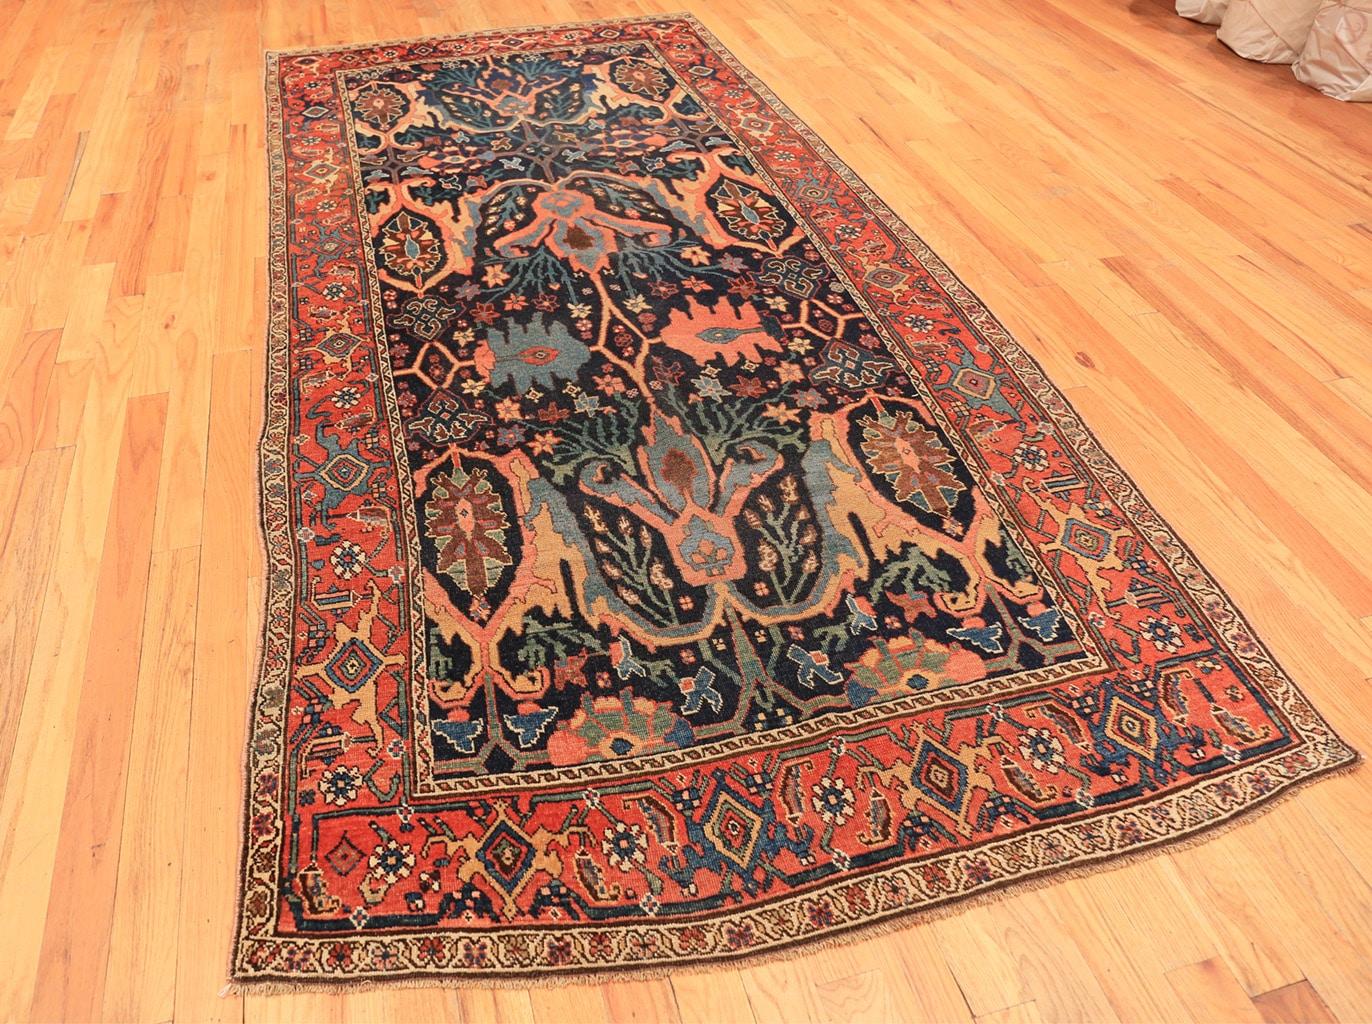 19th Century Beautiful Antique Blue Background Persian Bidjar Carpet. Size: 5' 2